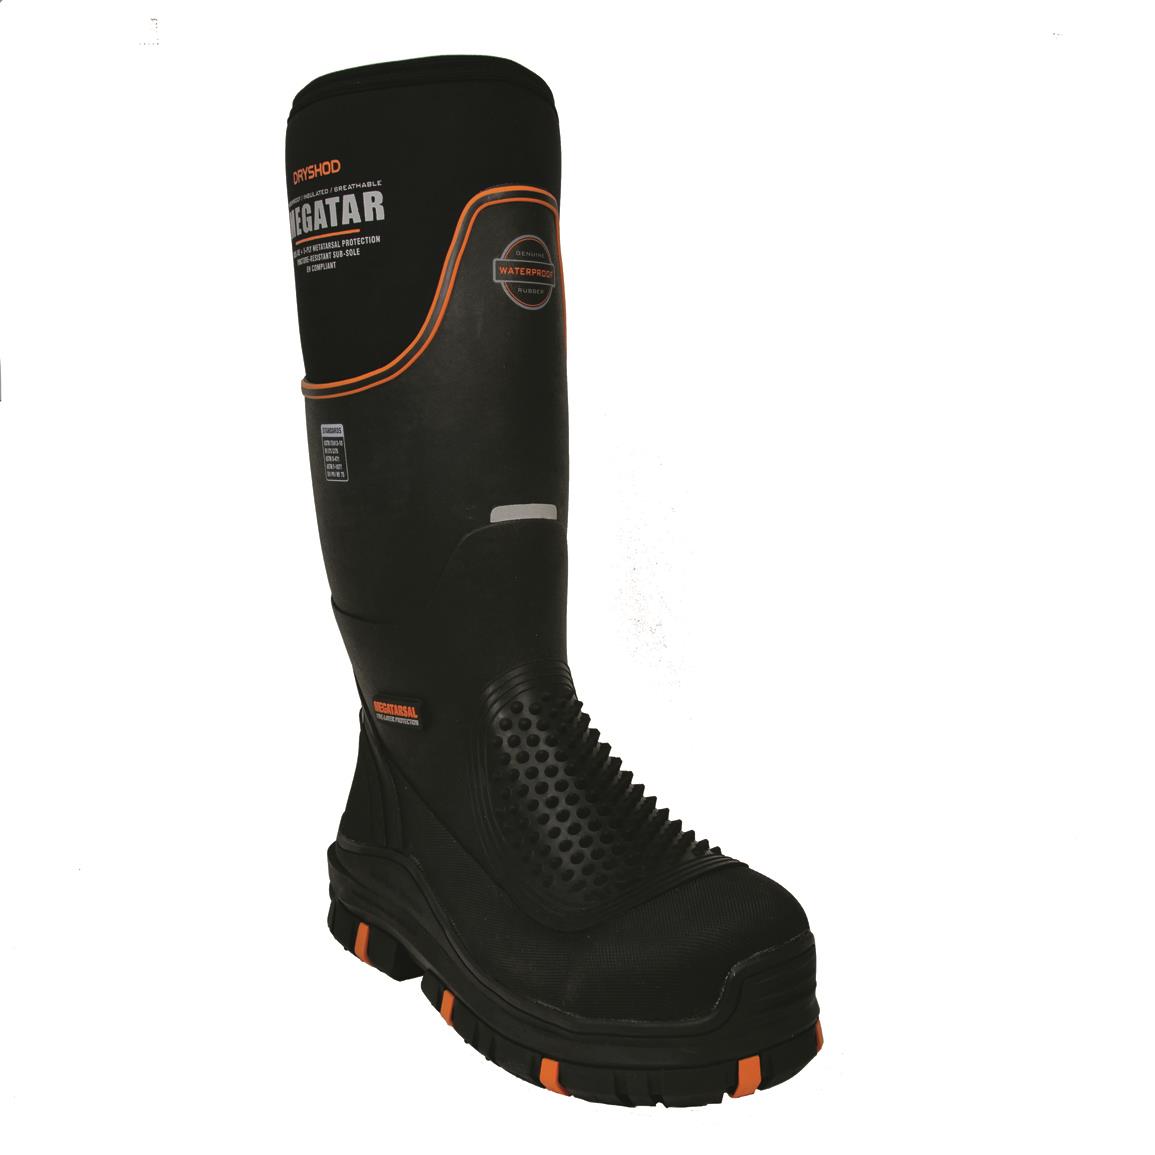 DryShod Men's Megatar Steel-Toe Rubber Work Boots, -20°F, Black/orange